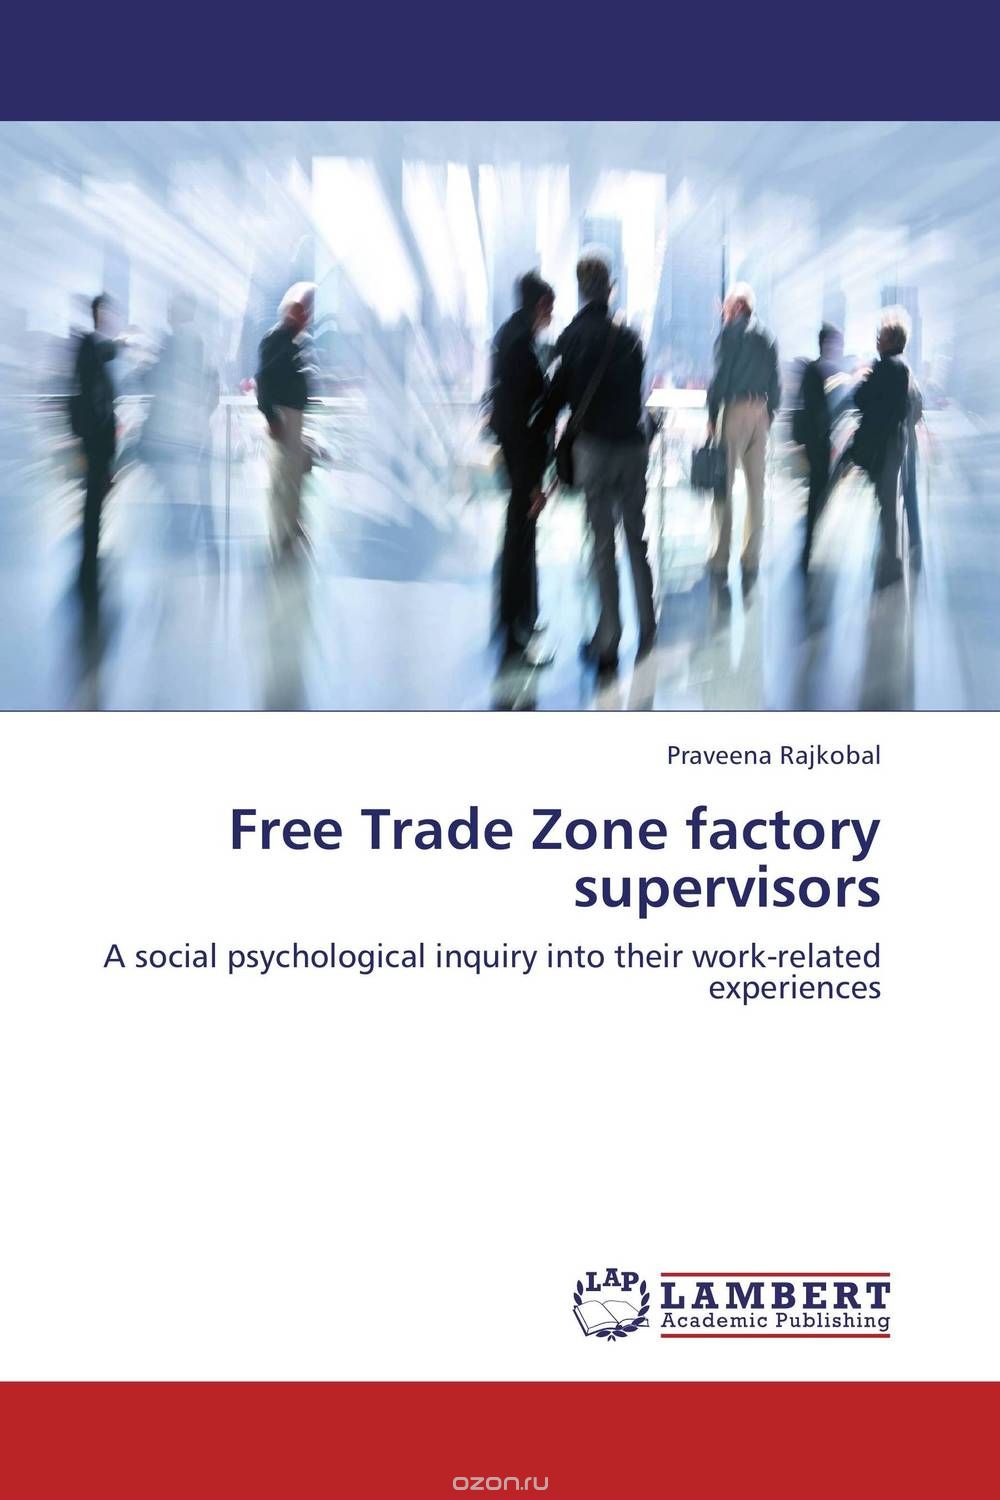 Скачать книгу "Free Trade Zone factory supervisors"